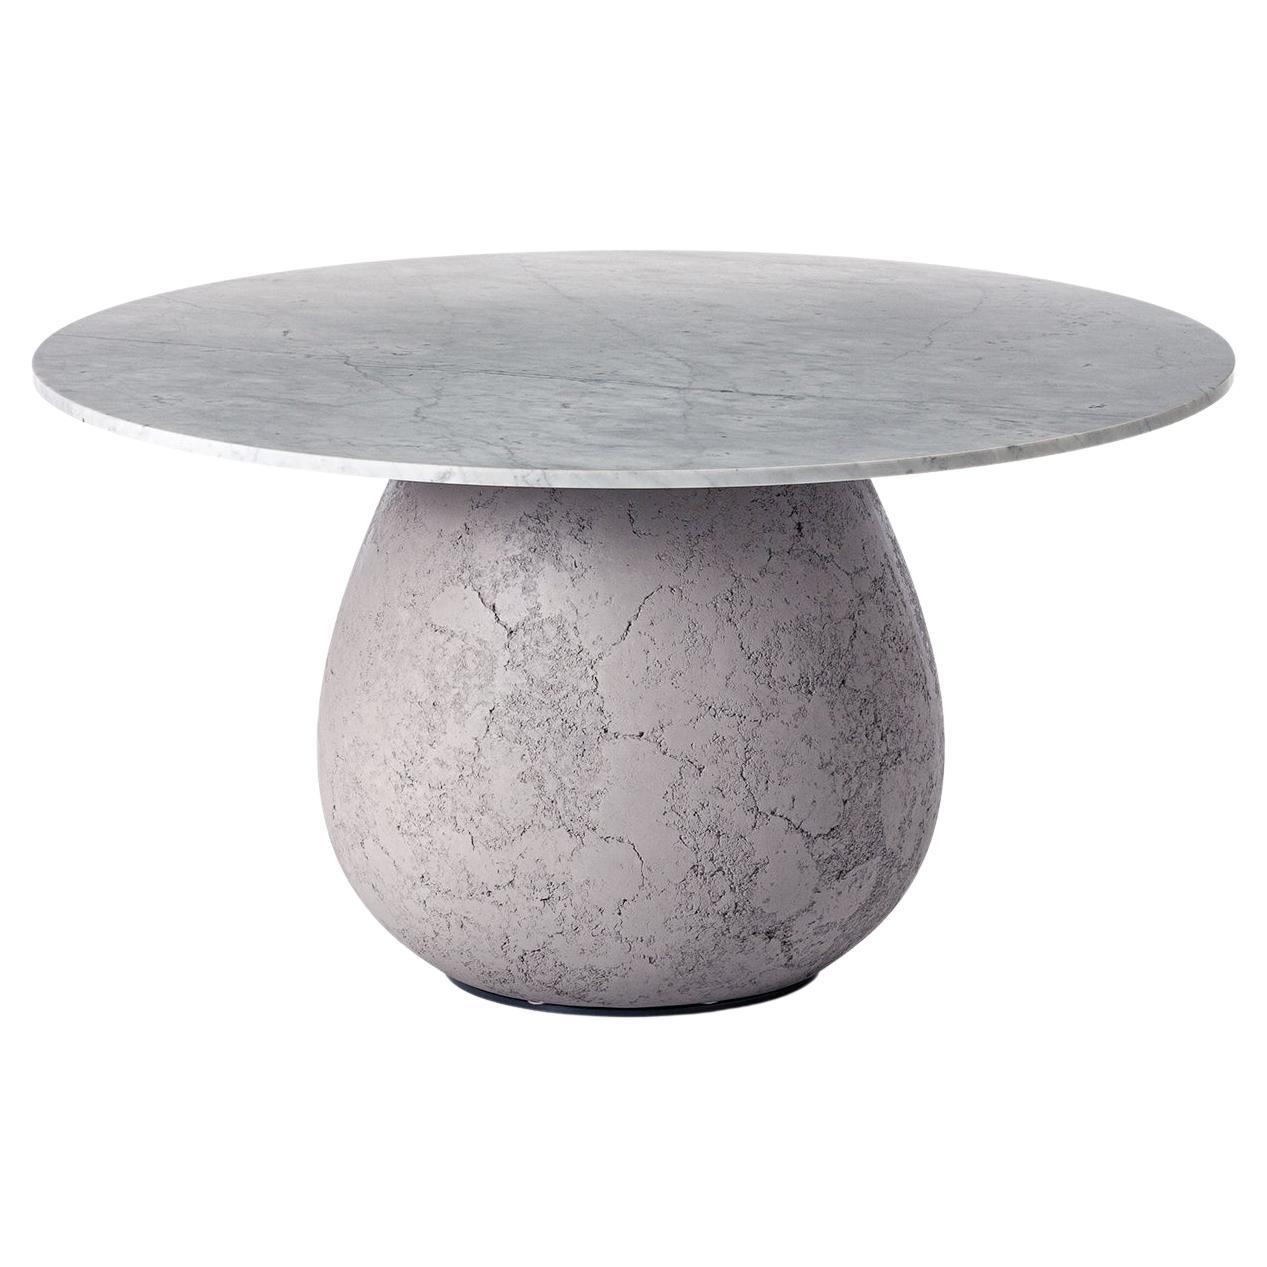 How do I polish a concrete table?